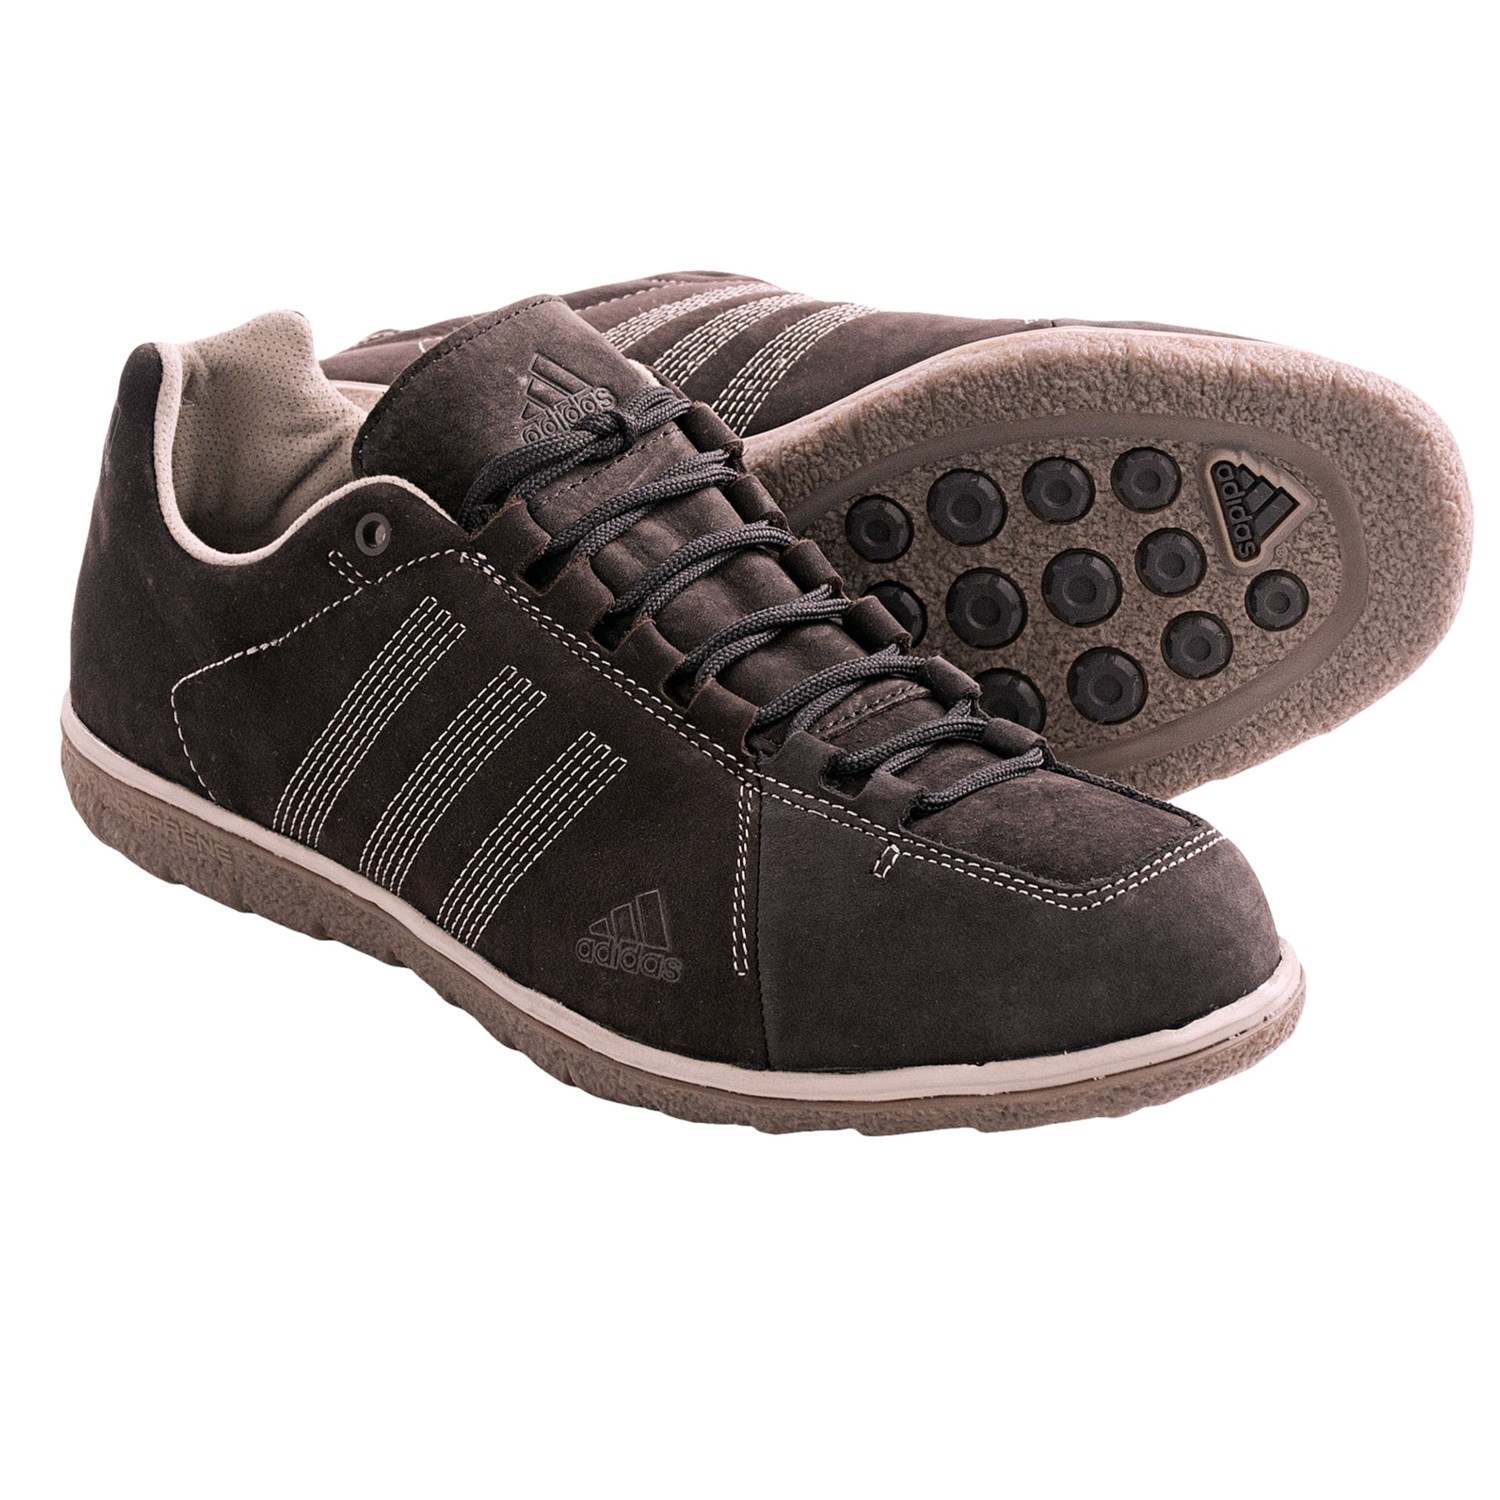 Adidas Outdoor Zappan DLX Shoes (For Men) in Dark BrownCollegiate ...